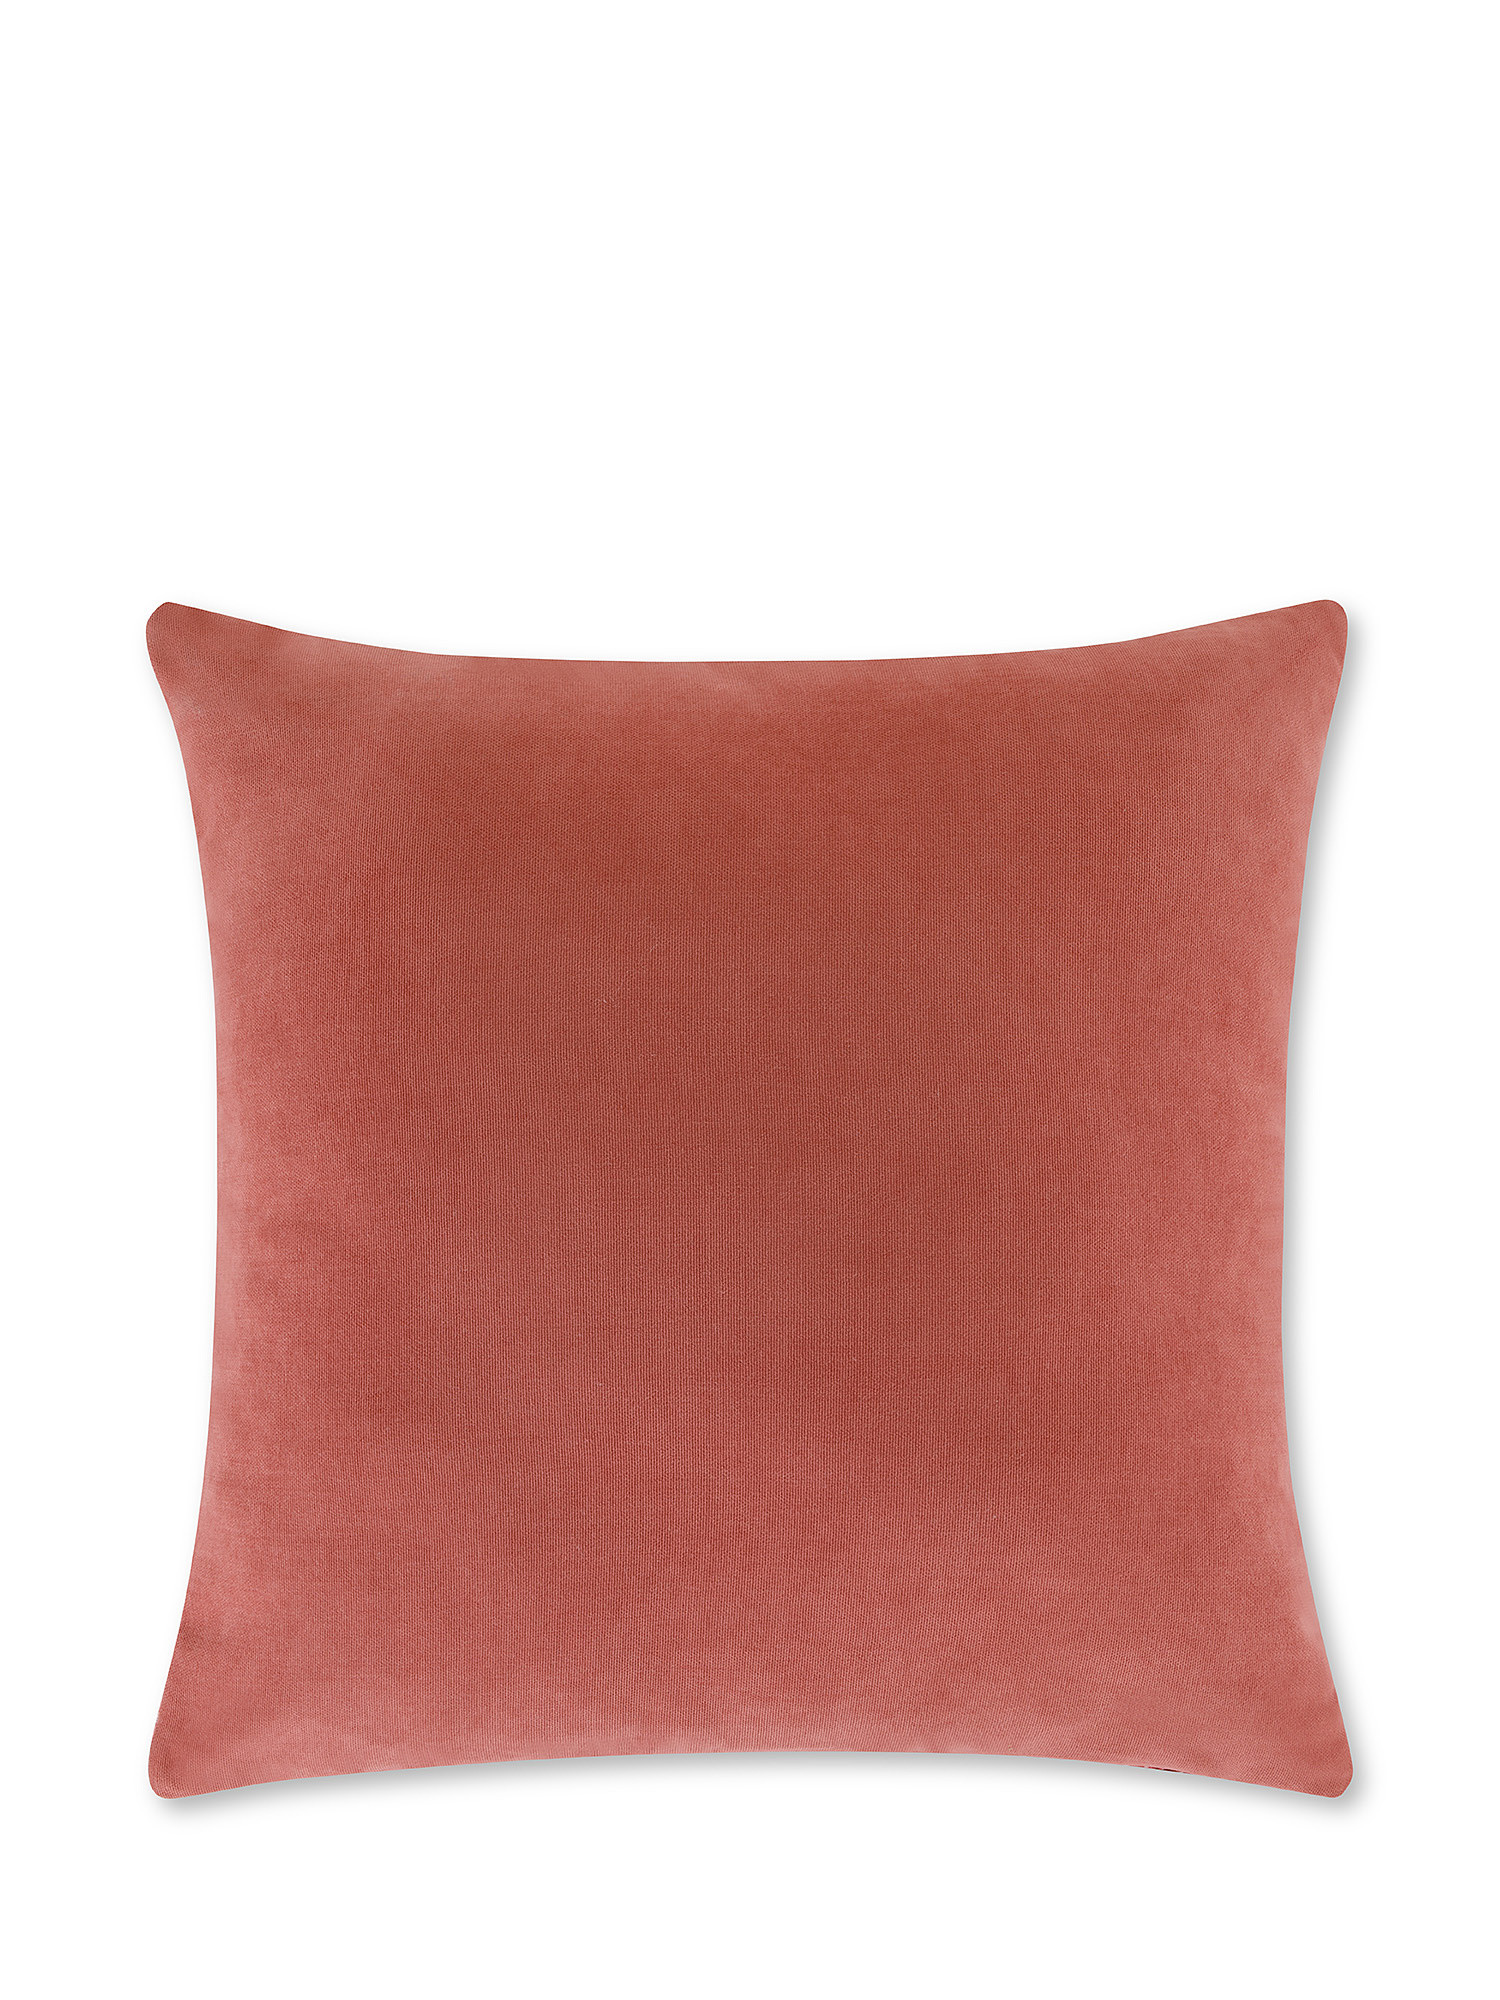 Jacquard cushion with zigzag motif 45x45cm, Pink, large image number 1